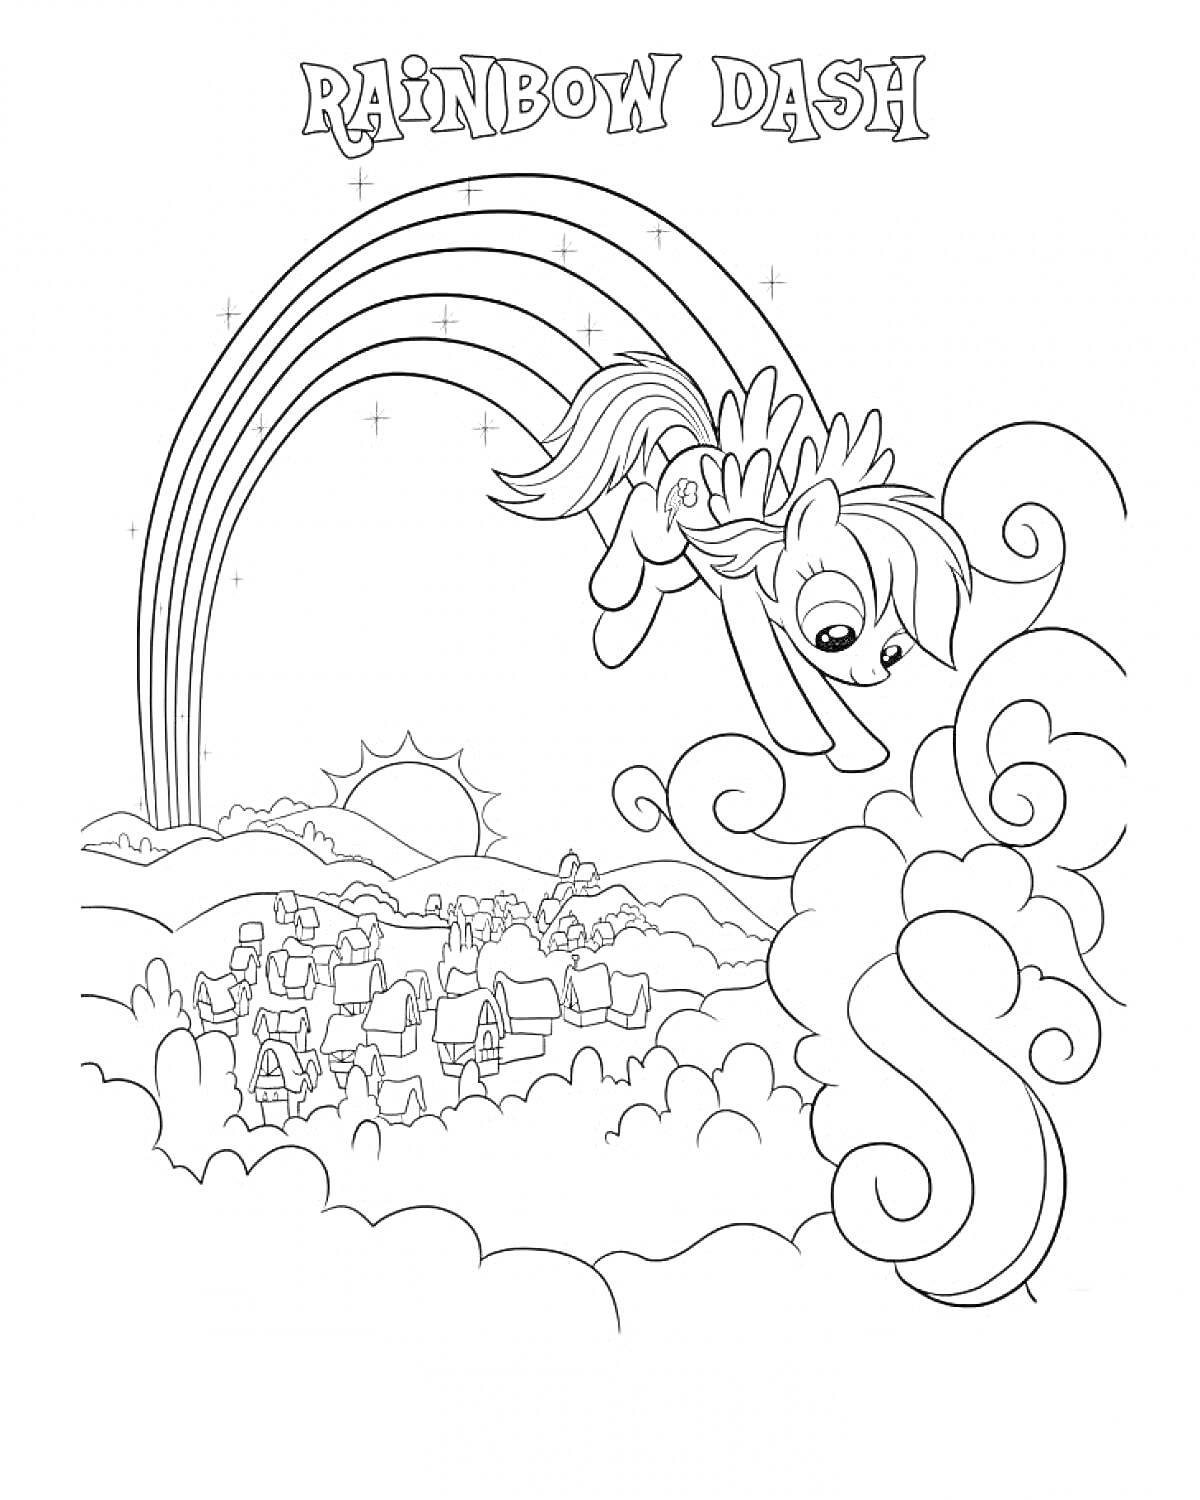 Рейнбоу Дэш летит через облака на фоне радуги с видом города и восходящего солнца